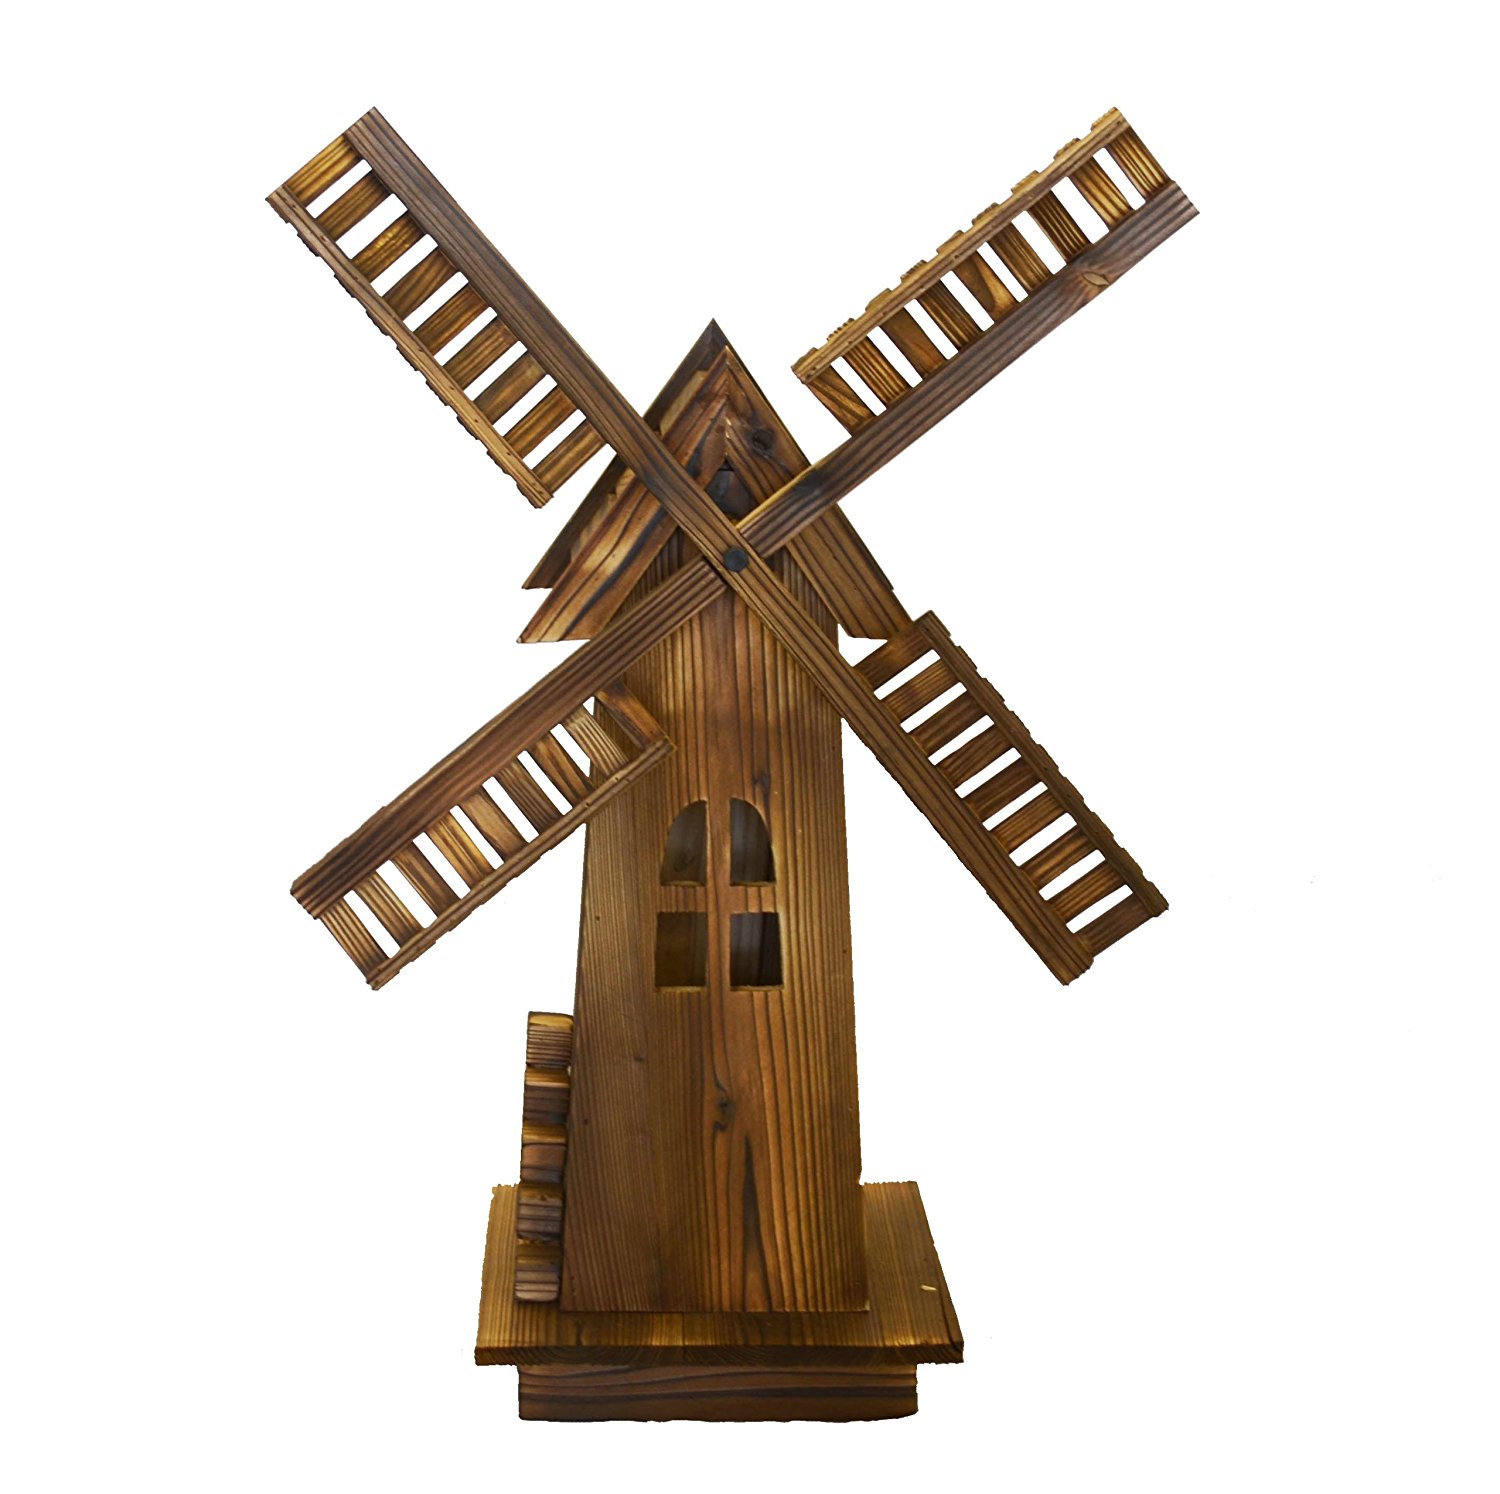 Amazon.com : Wooden Dutch Windmill - Classic Old-fashioned Windmill ...